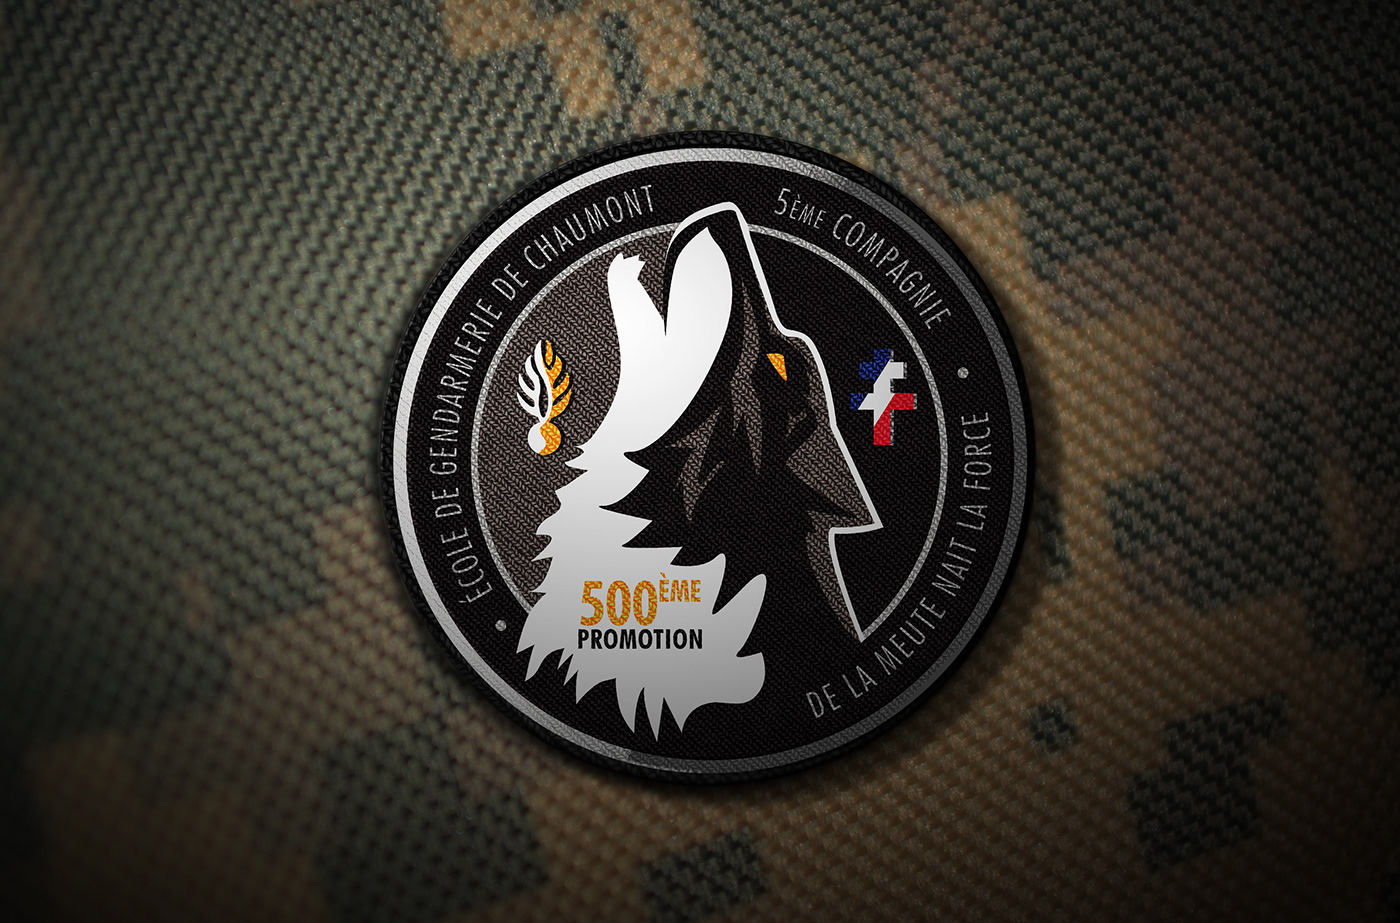 badge chaumont ecusson Gendarmerie rondache roundel wolf loup militaire Military